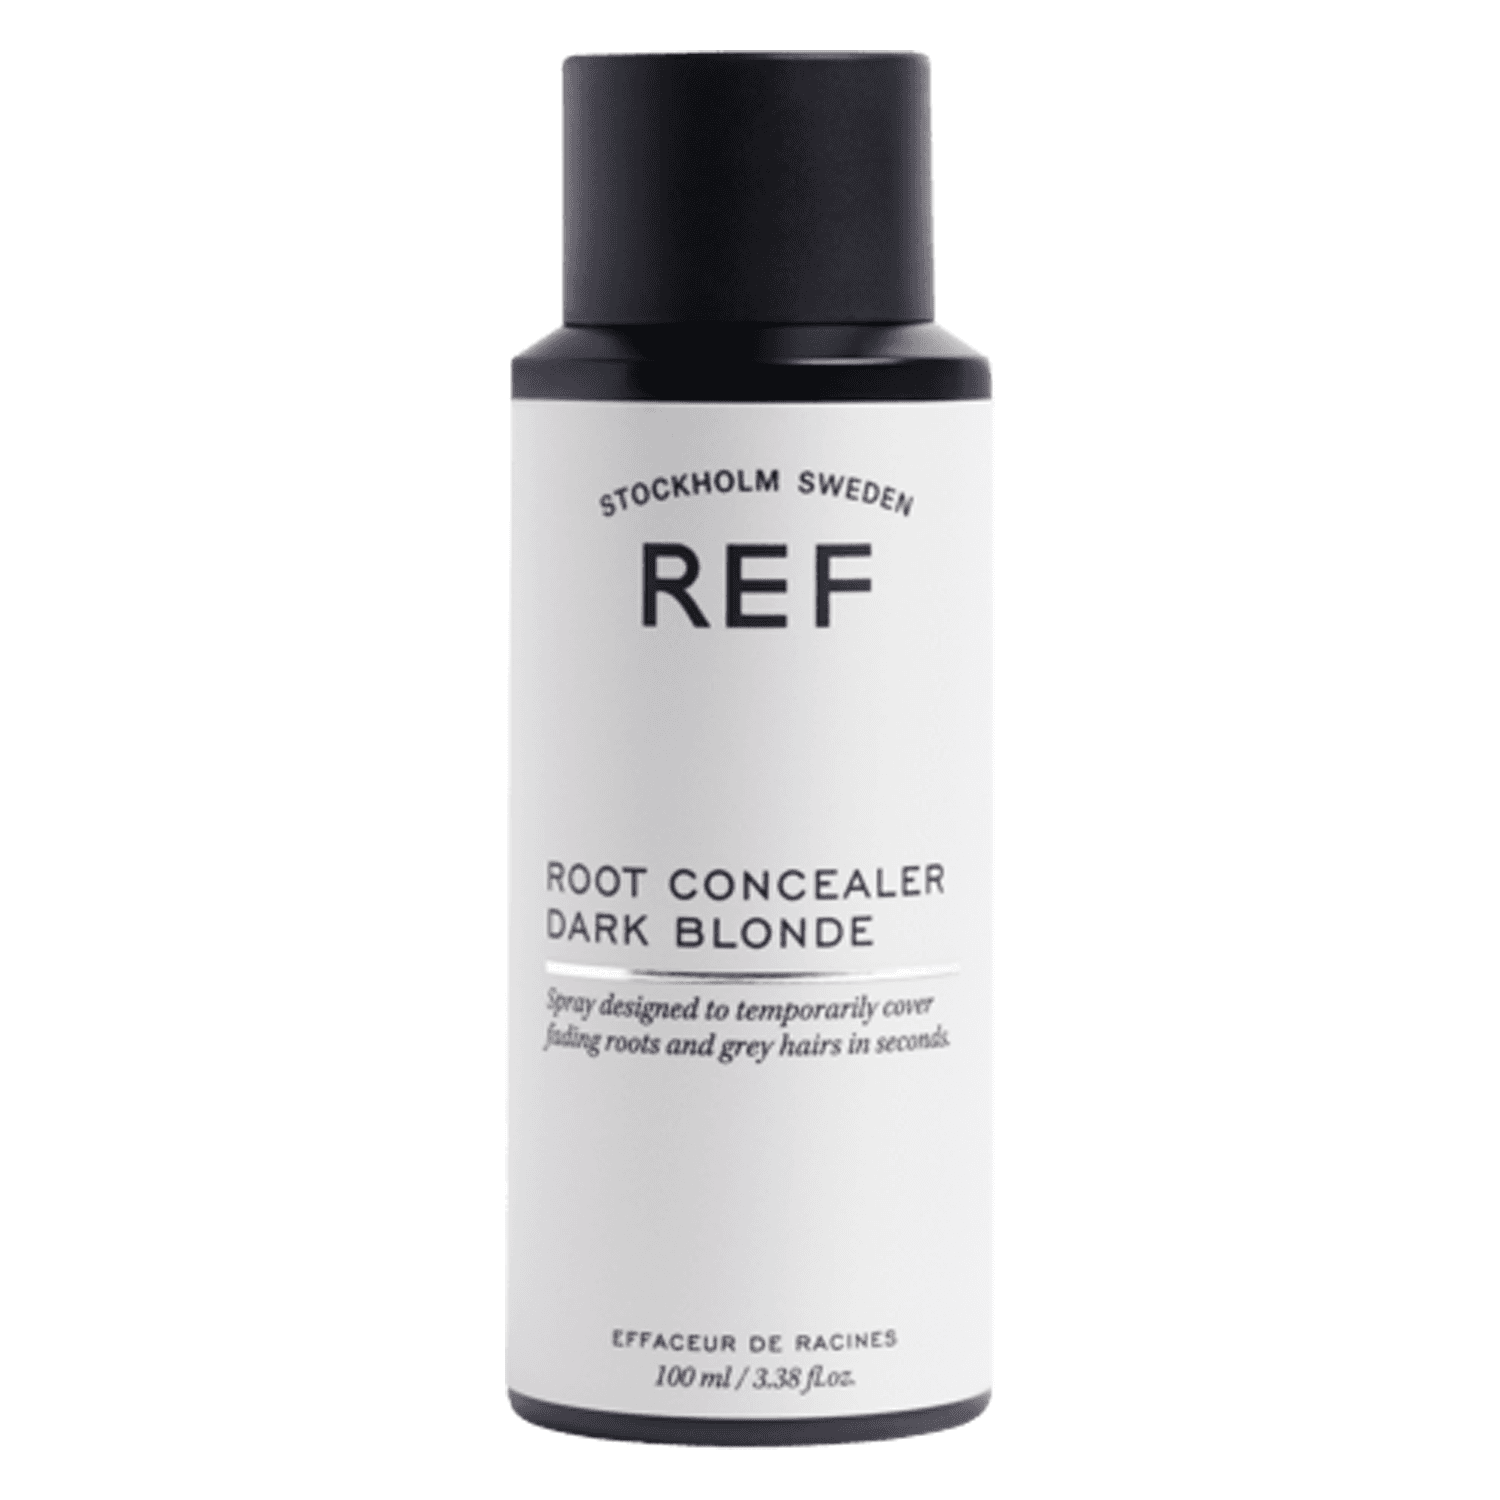 REF Styling - Root Concealer Dark Blonde